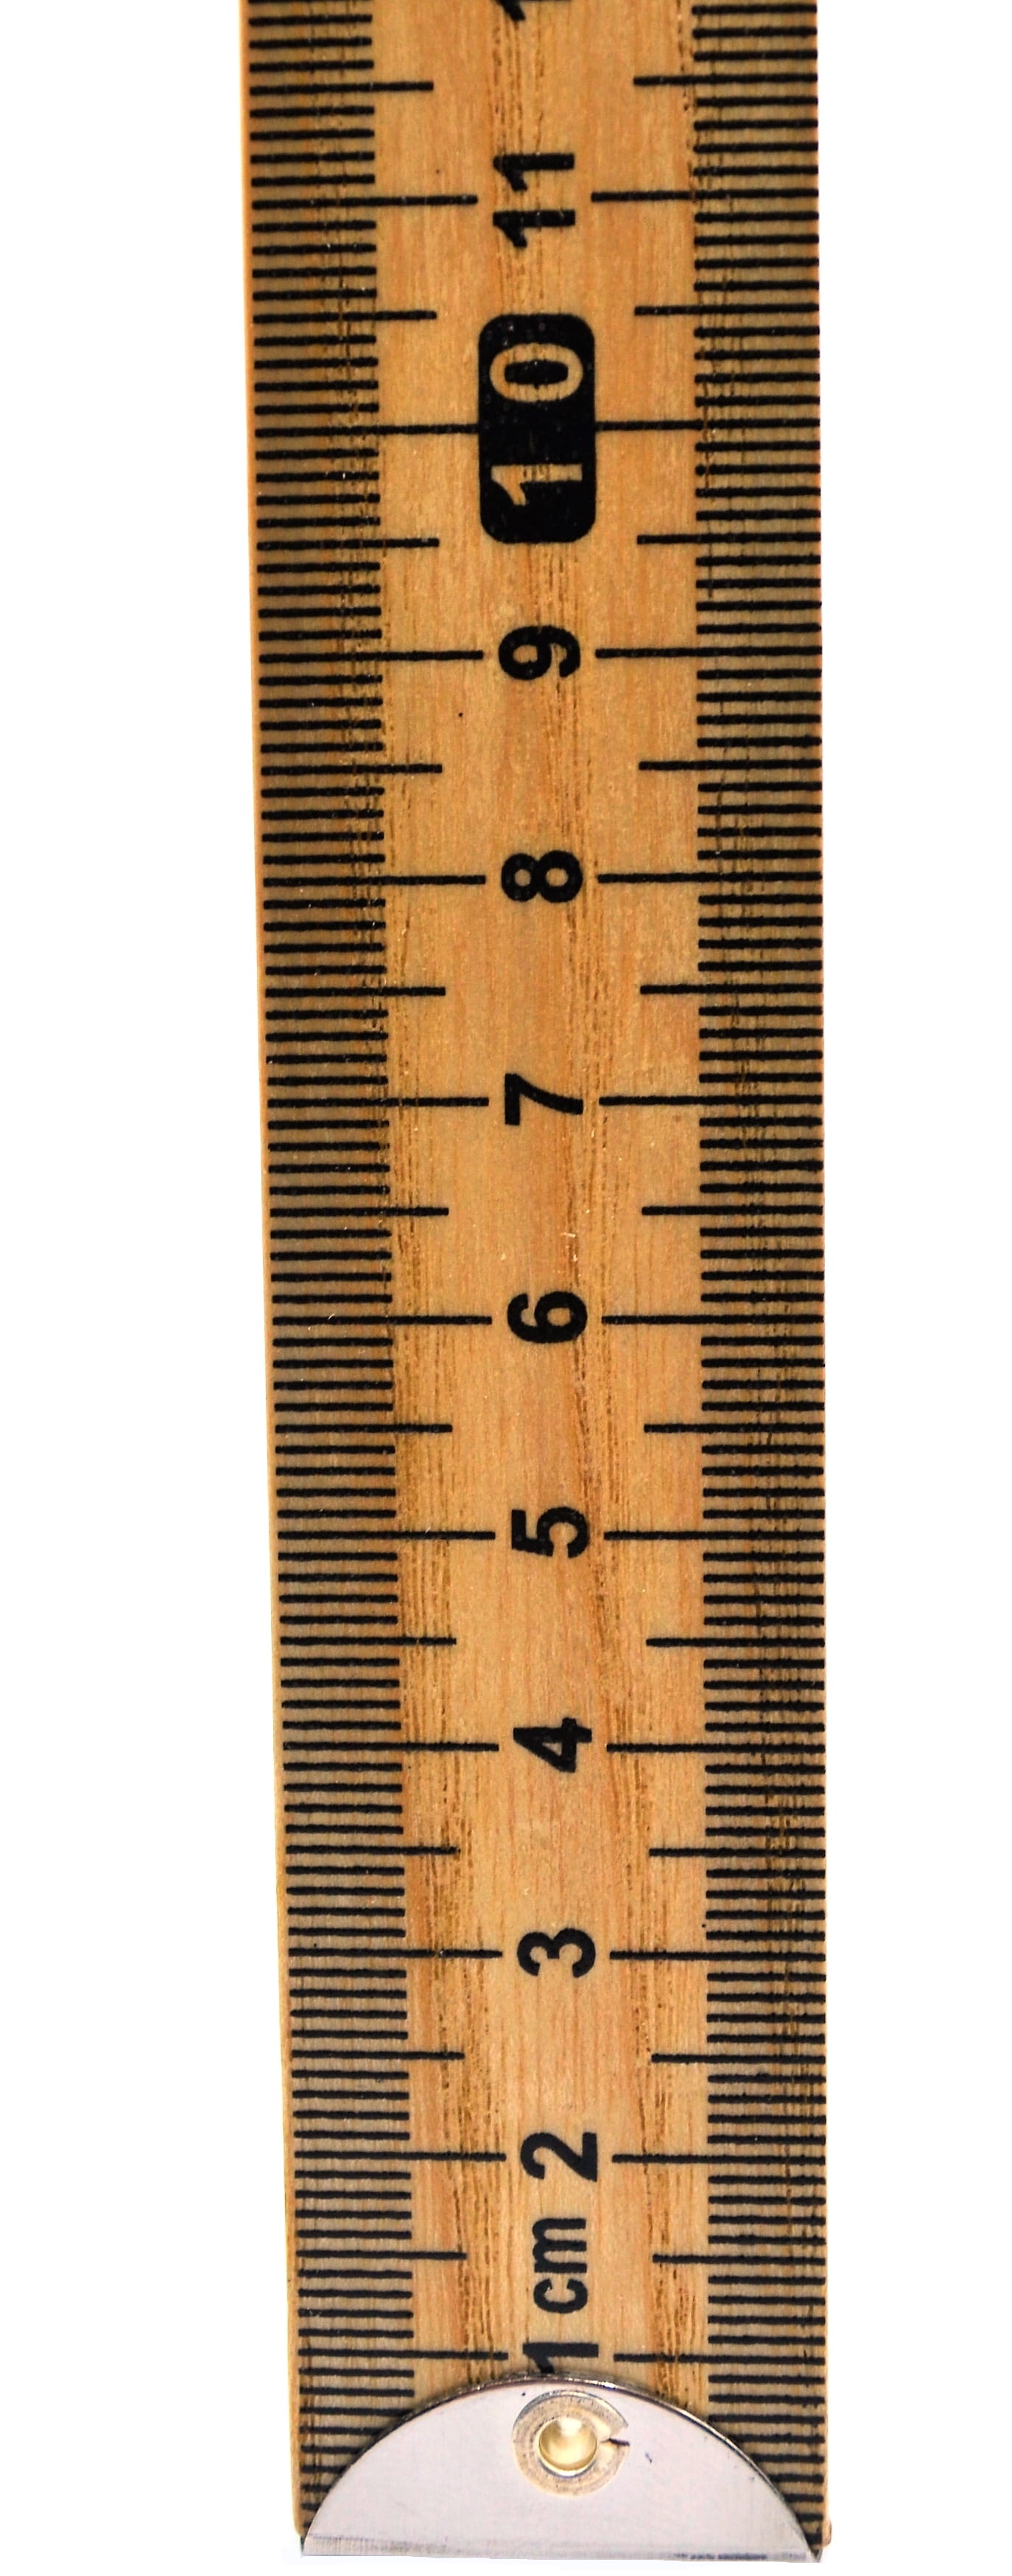 EAI Education Folding Meter Stick - Set of 5